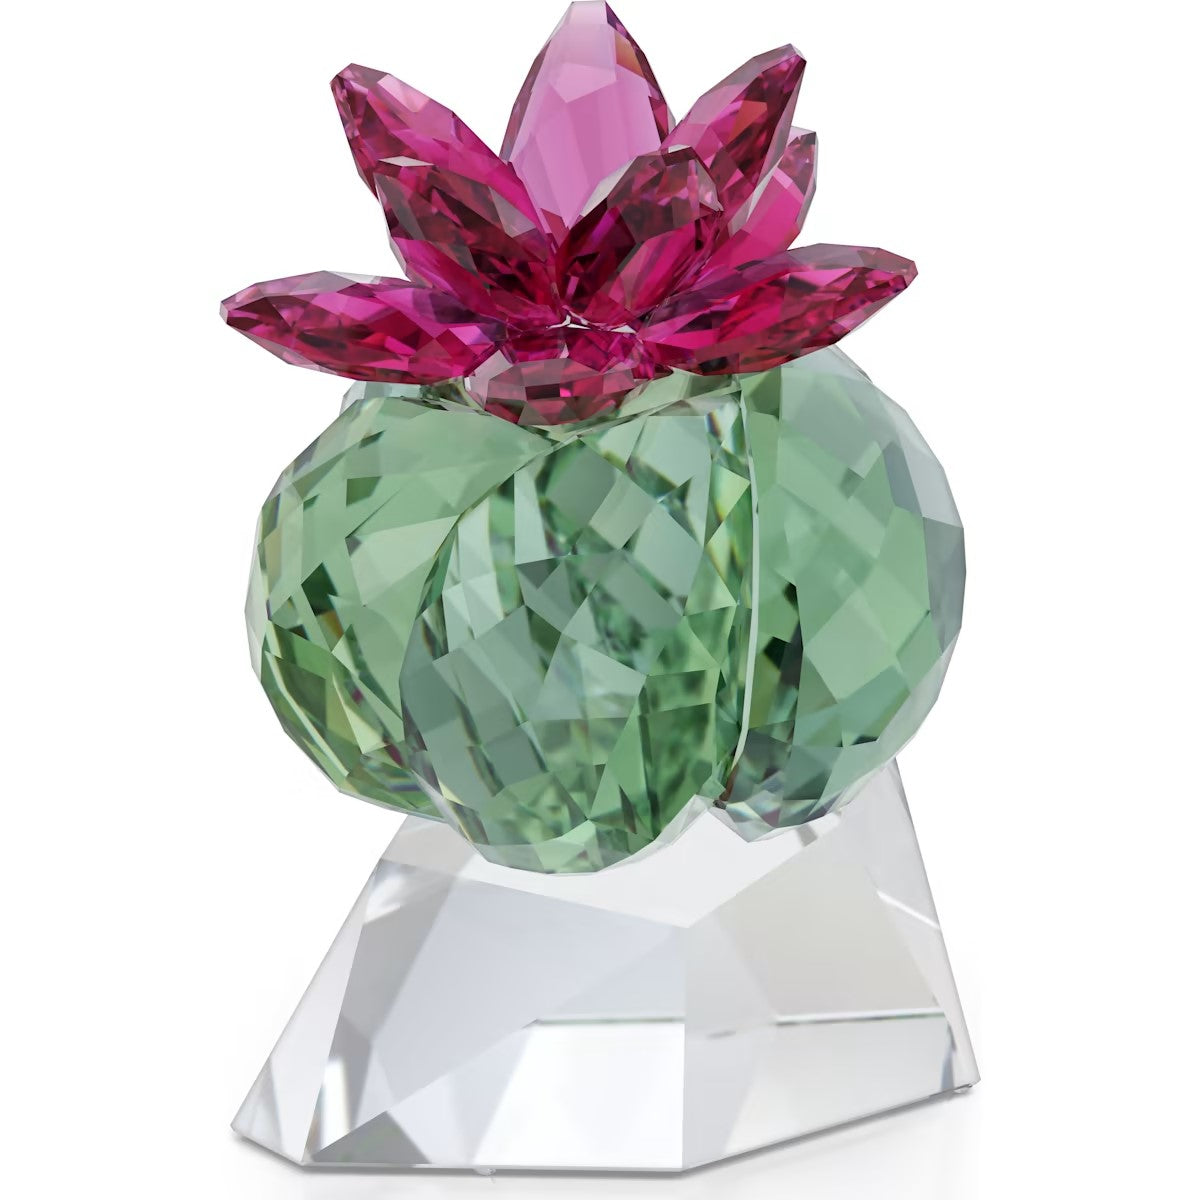 Swarovski Crystal Flowers Bordeaux Cactus - 5426978